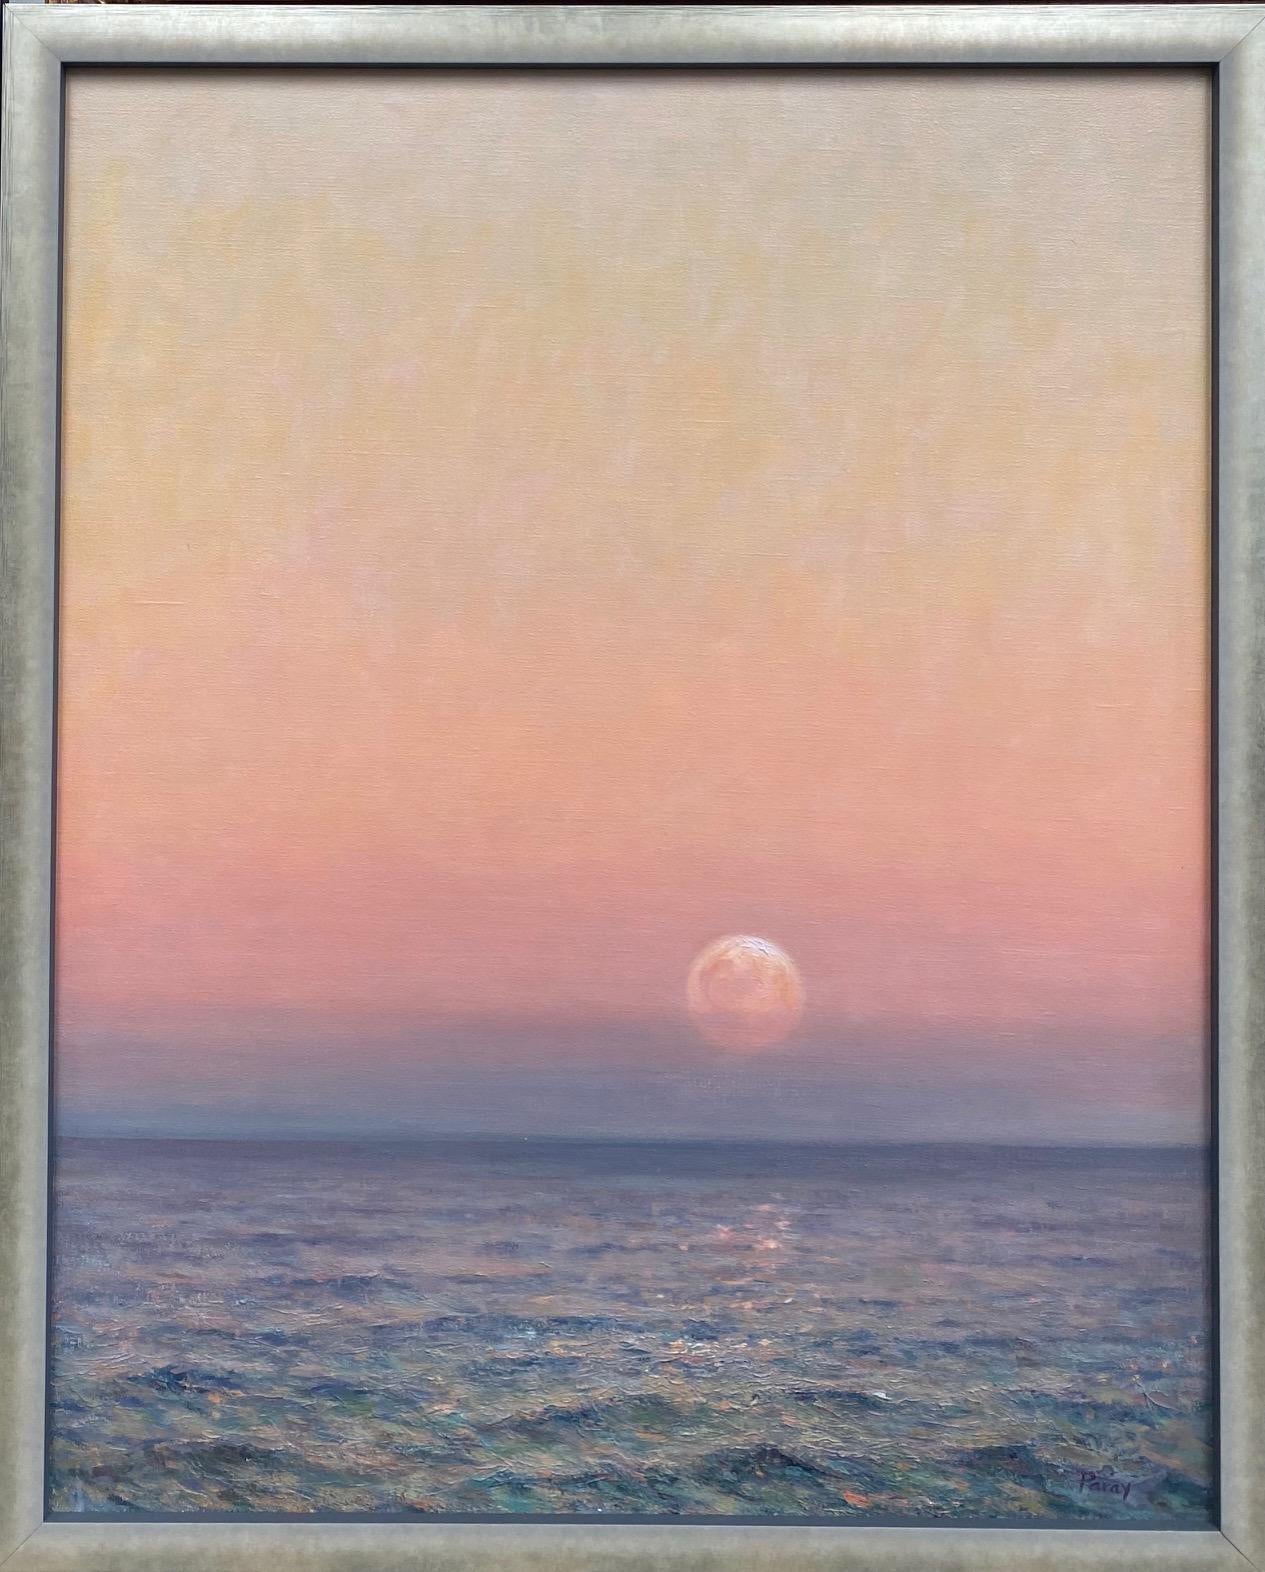 Laura Paray Landscape Painting - Ocean Moon Rise, original 30x24 contemporary marine landscape